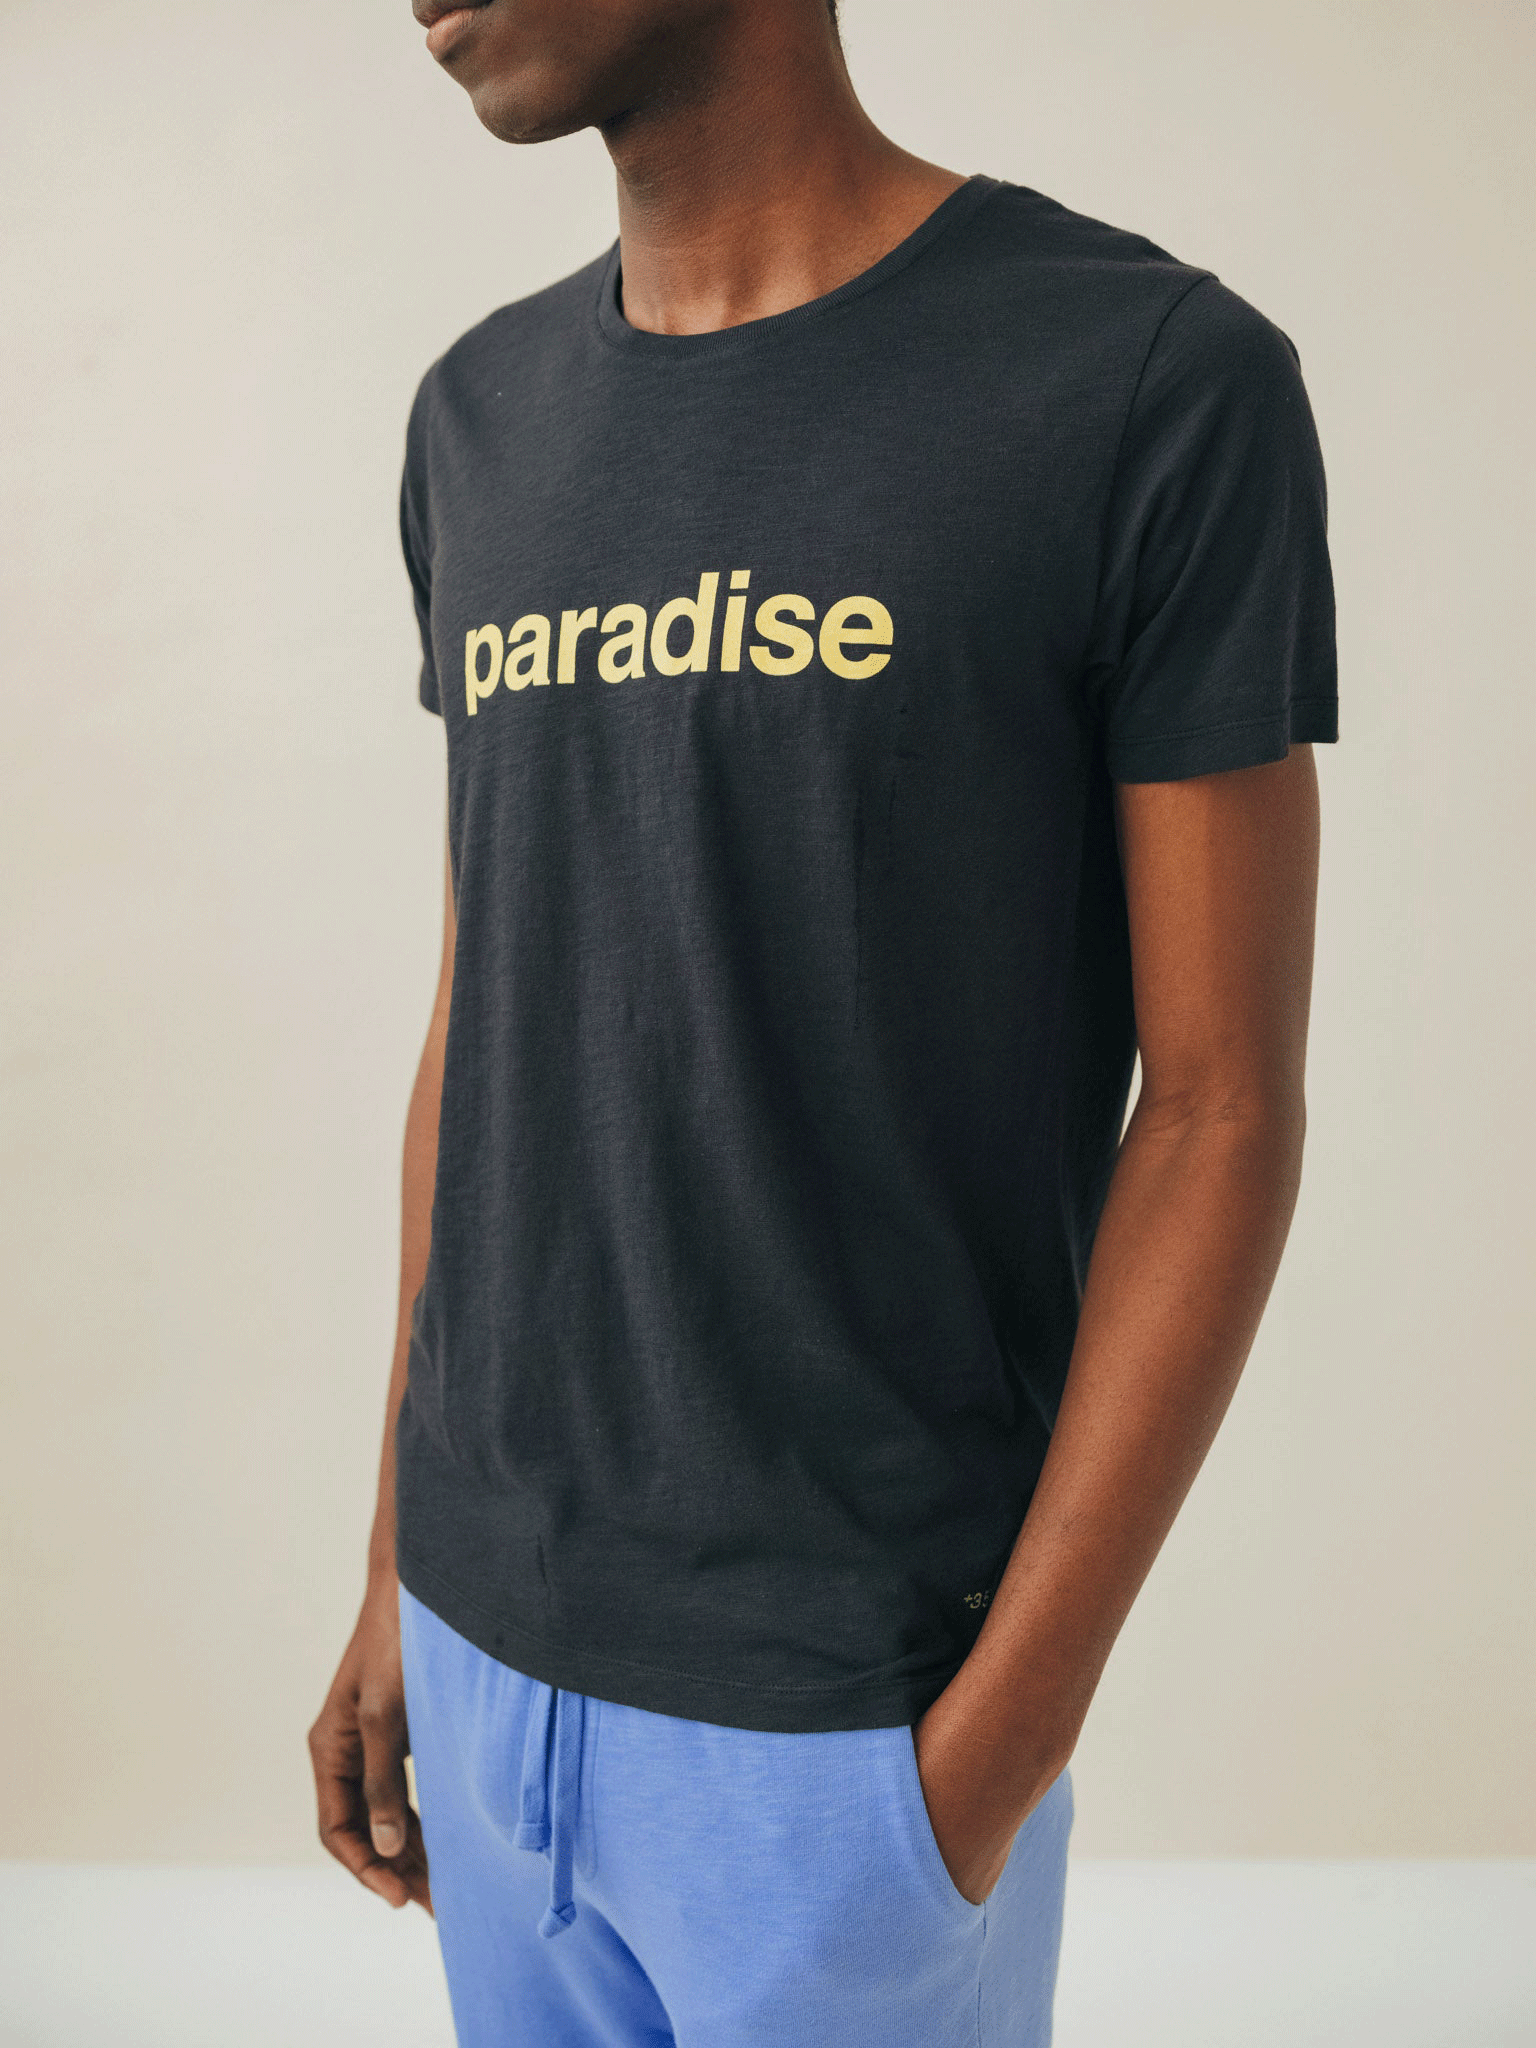 T-SHIRT GRAPHIC PARADISE BLACK & PALE YELLOW